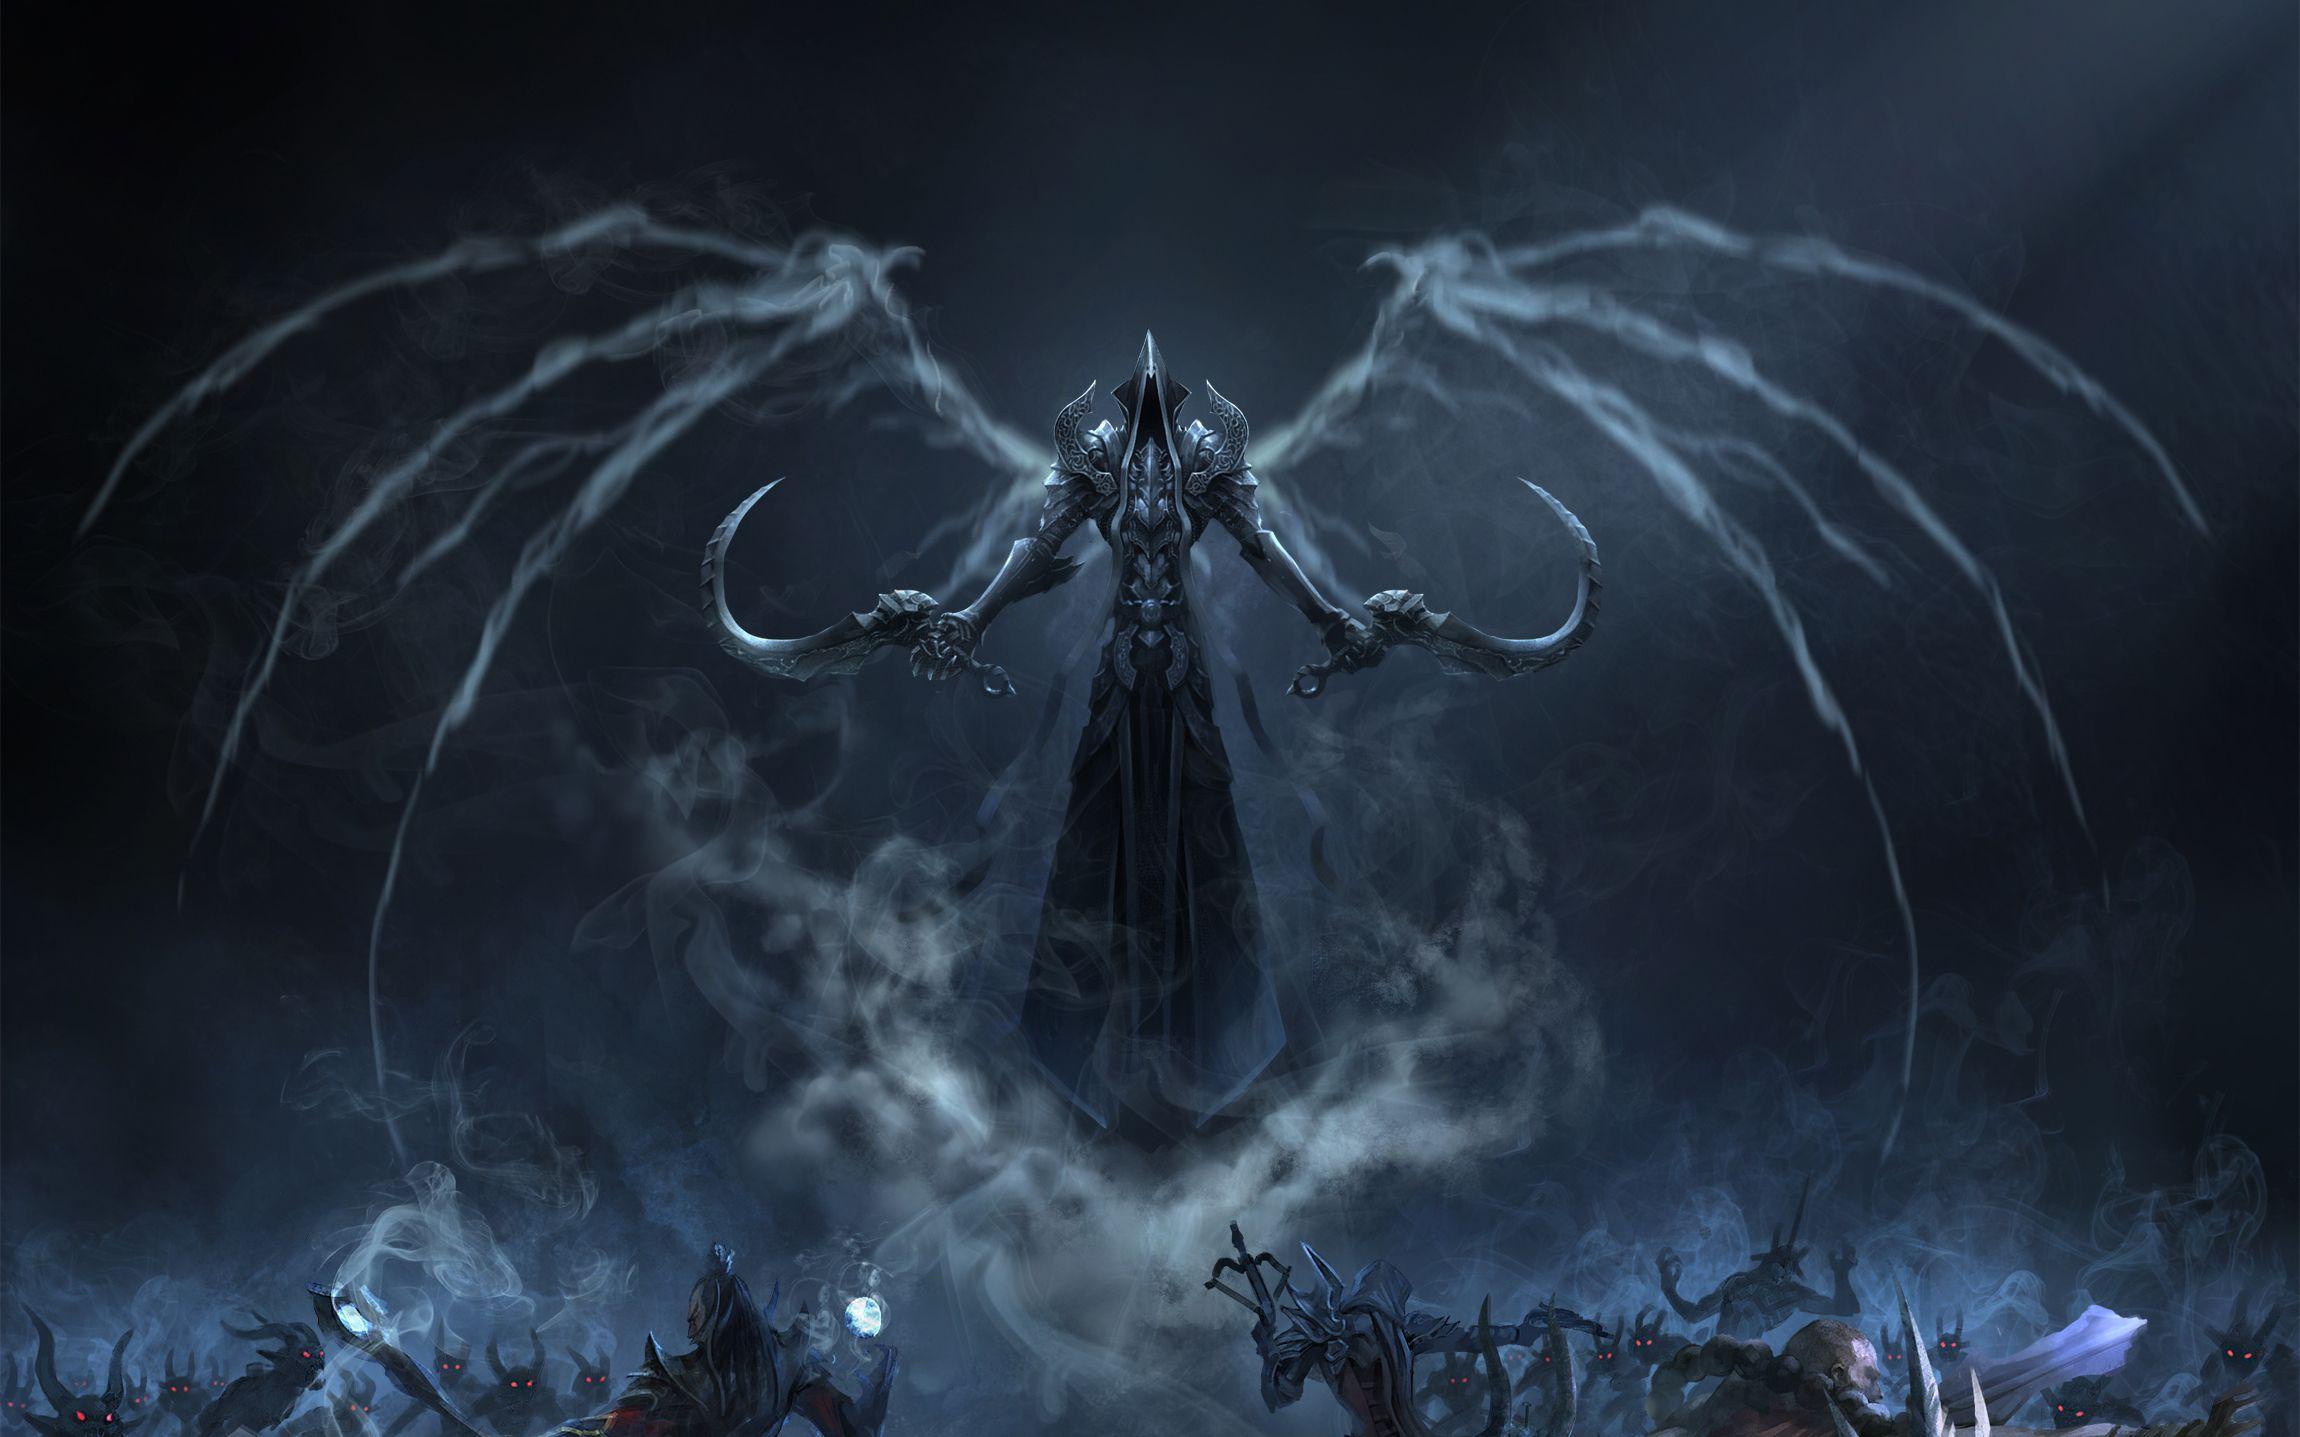 Diablo III Game Mathael Angel Of Death Wielding Scythe